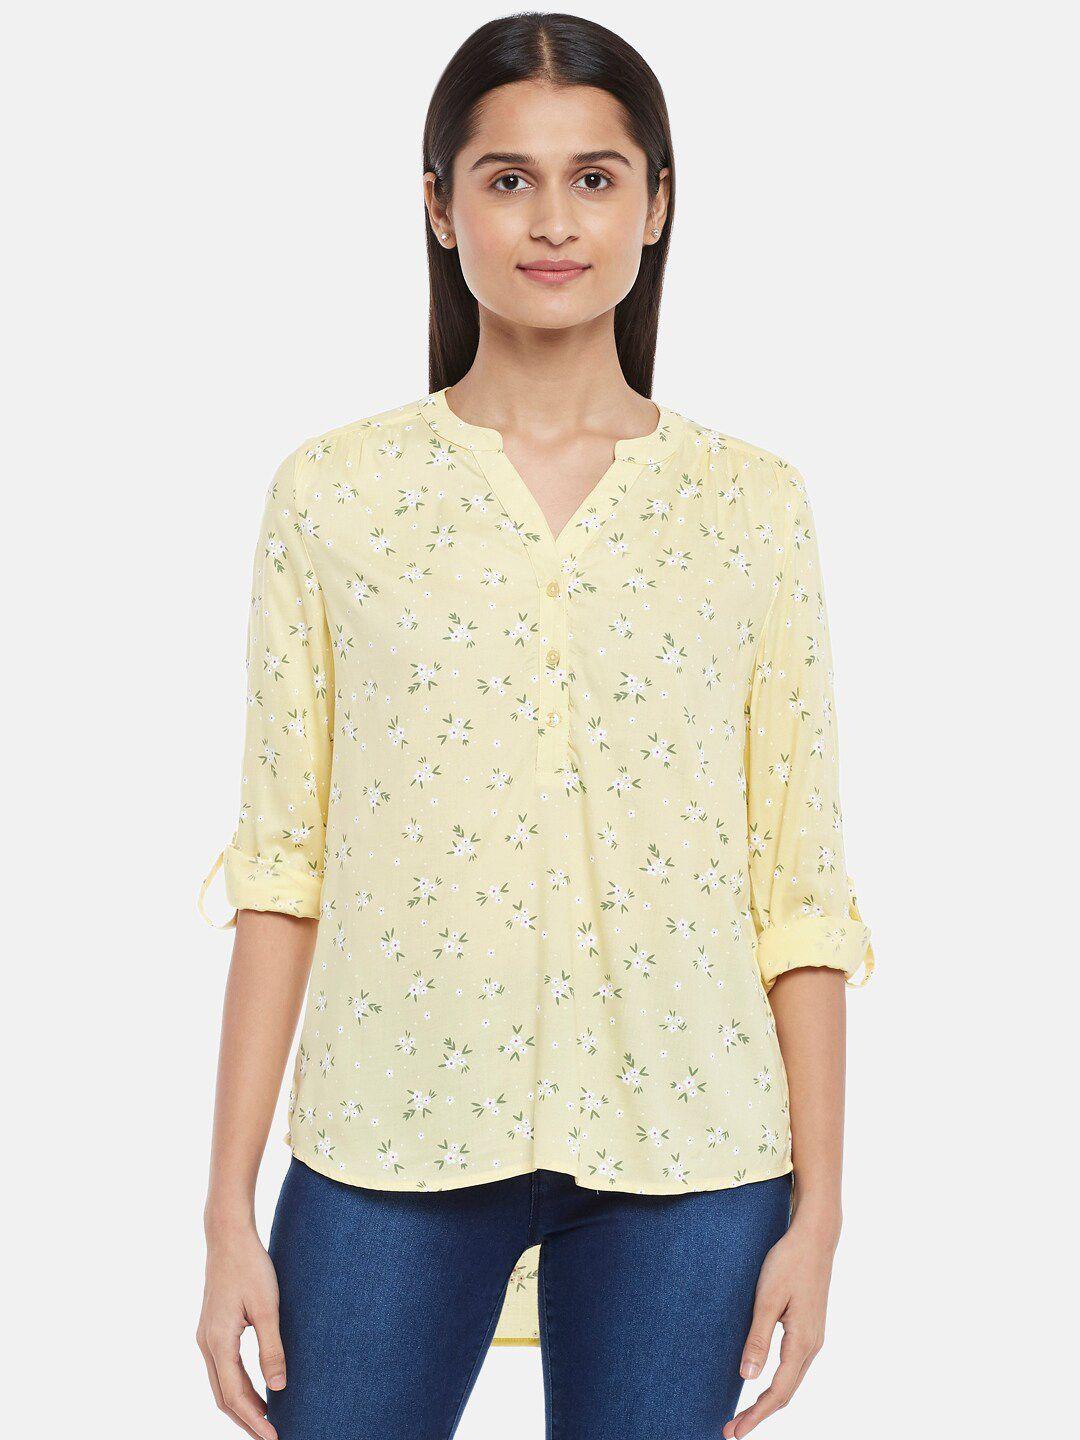 honey by pantaloons mustard yellow floral print mandarin collar roll-up sleeves shirt style top